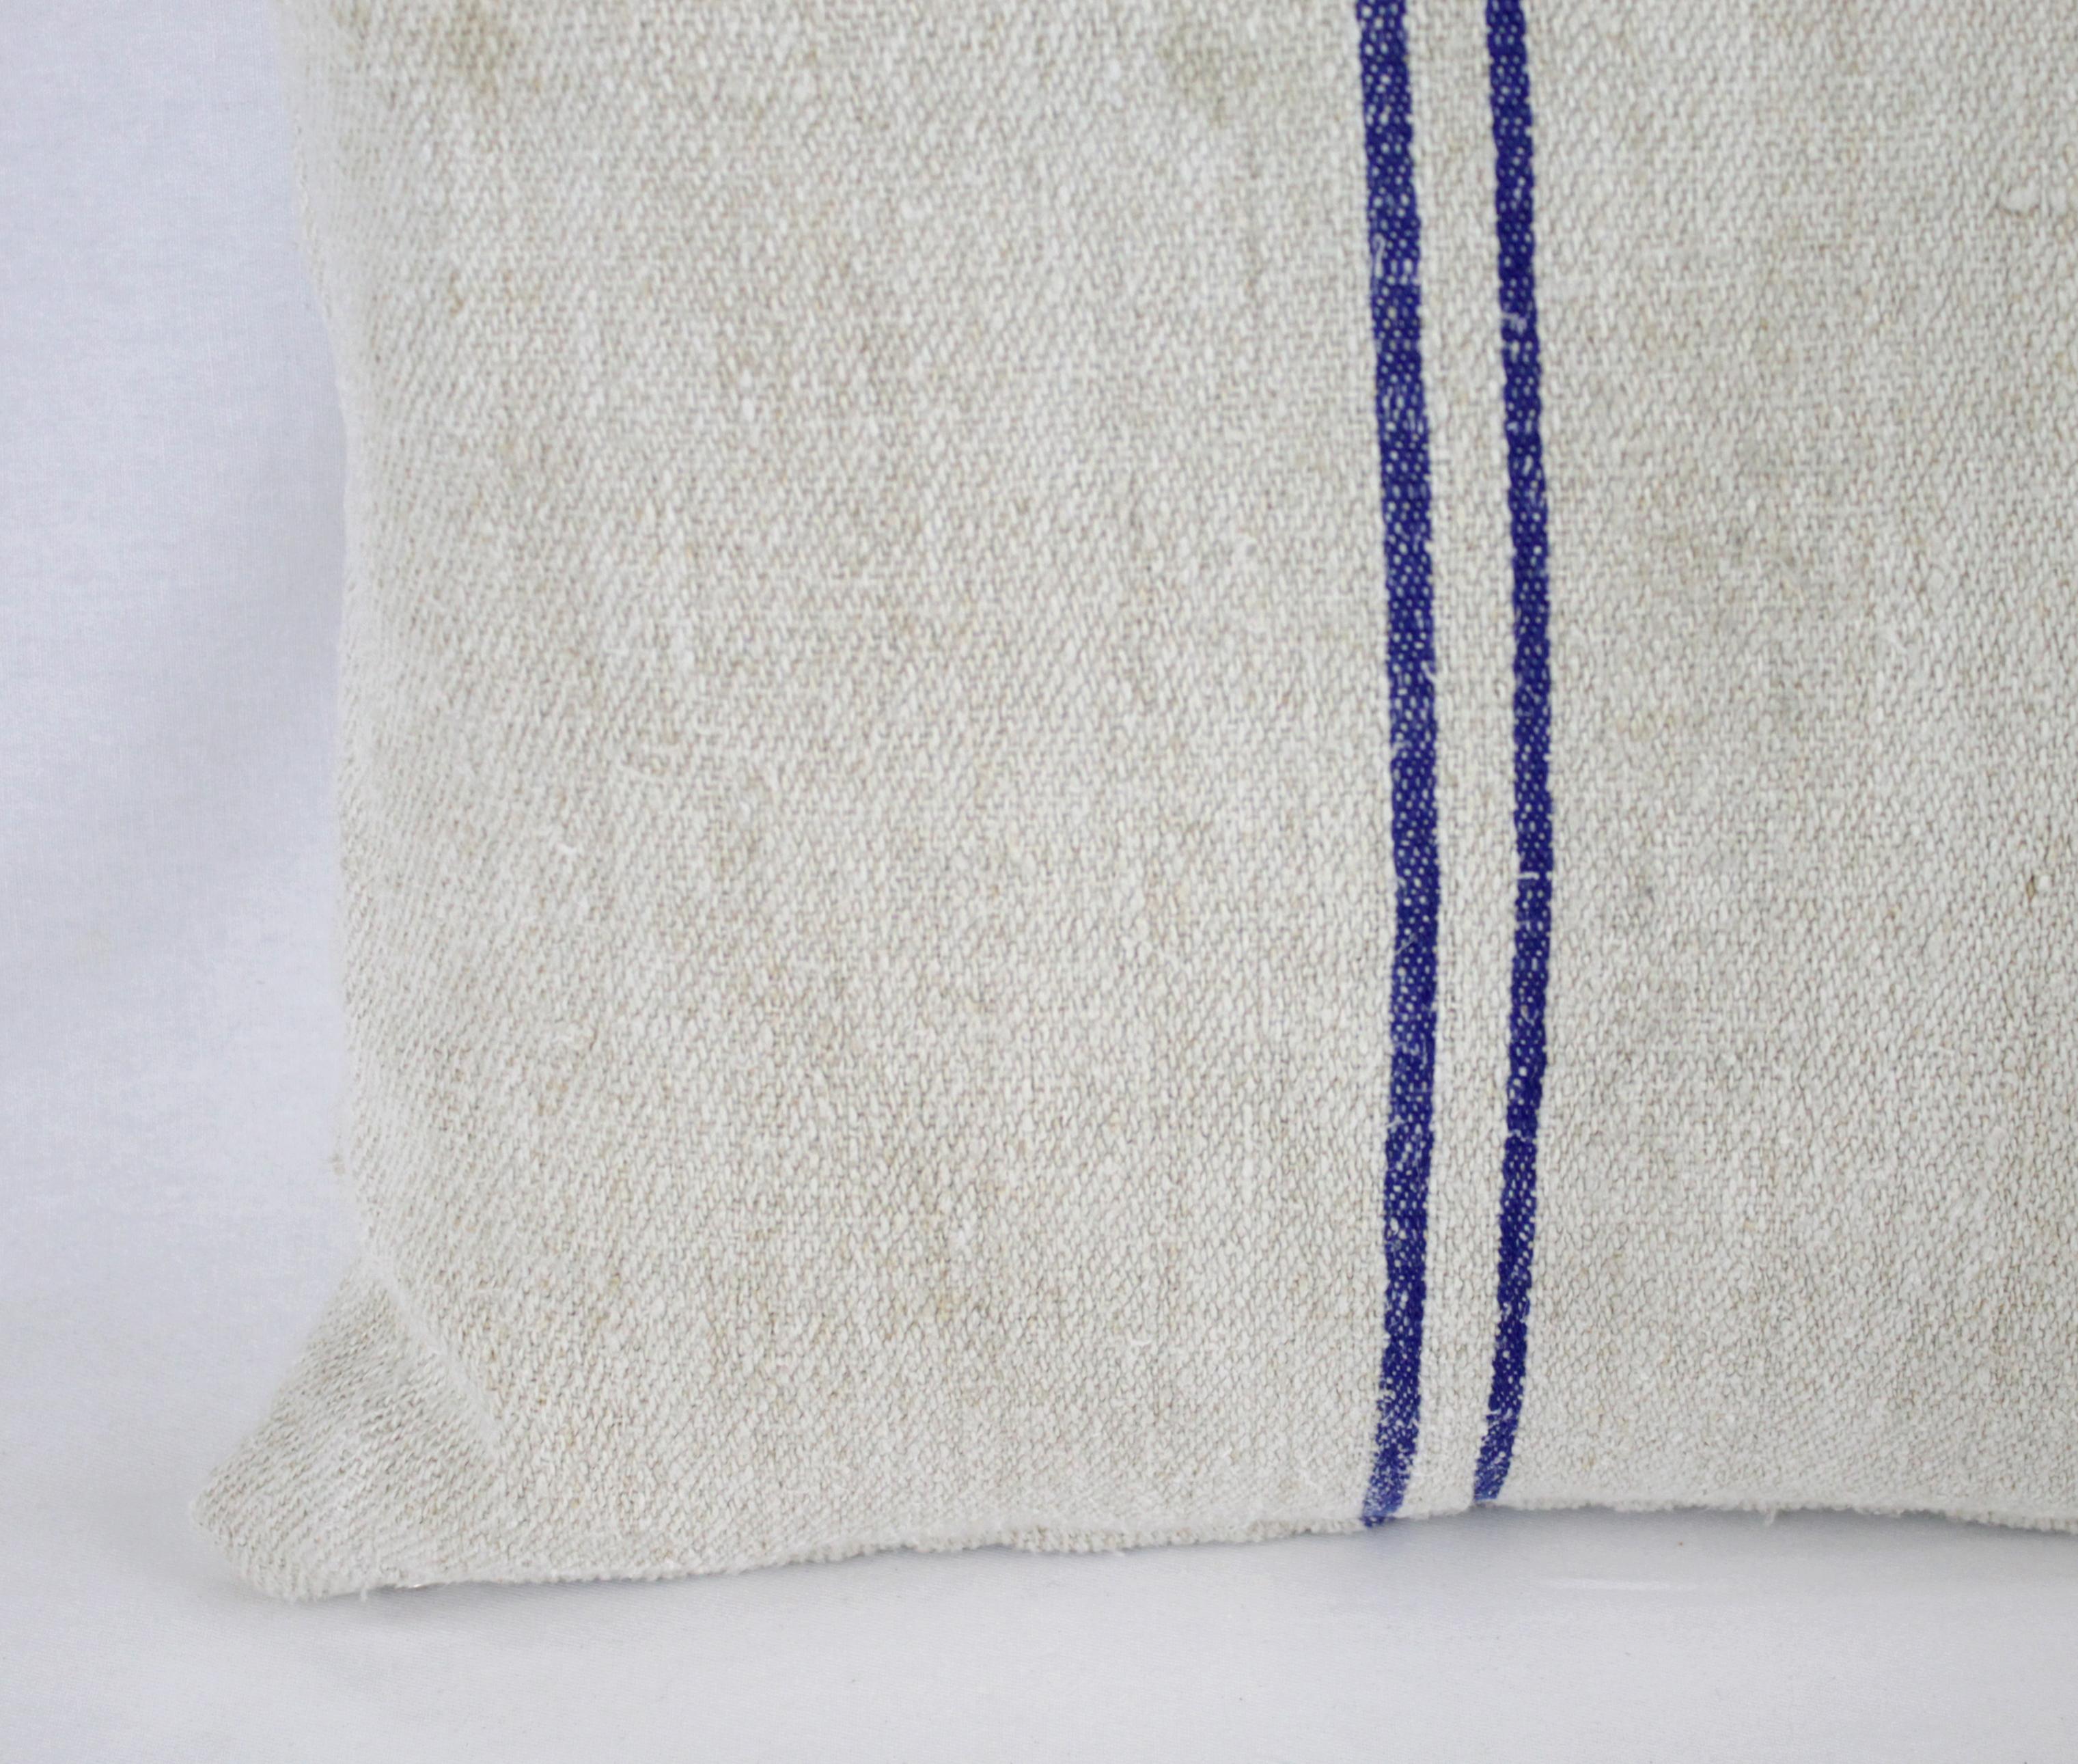 Antique Nubby 19th Century European Blue Stripe Grain Sack Pillows In Good Condition In Brea, CA